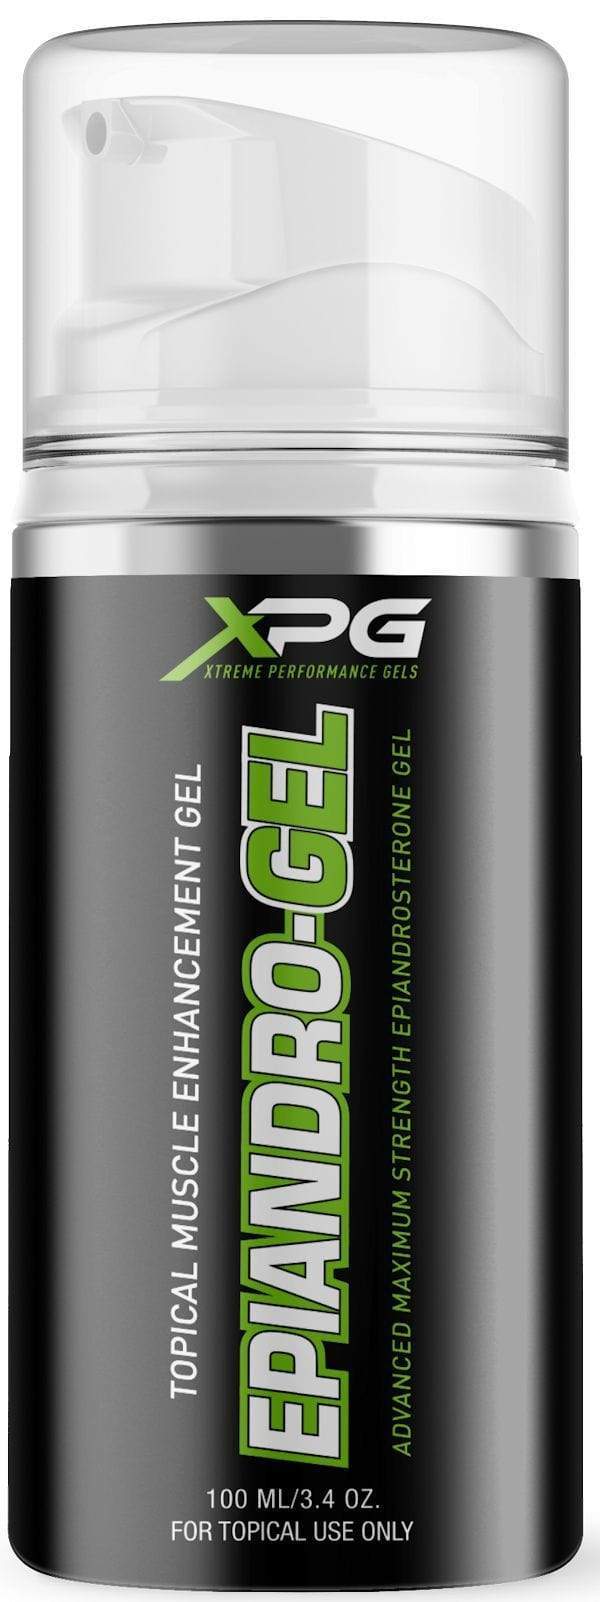 XPG Topical Cream muscle Xtreme Performance Gels EpiAndro Gels 3.4 oz